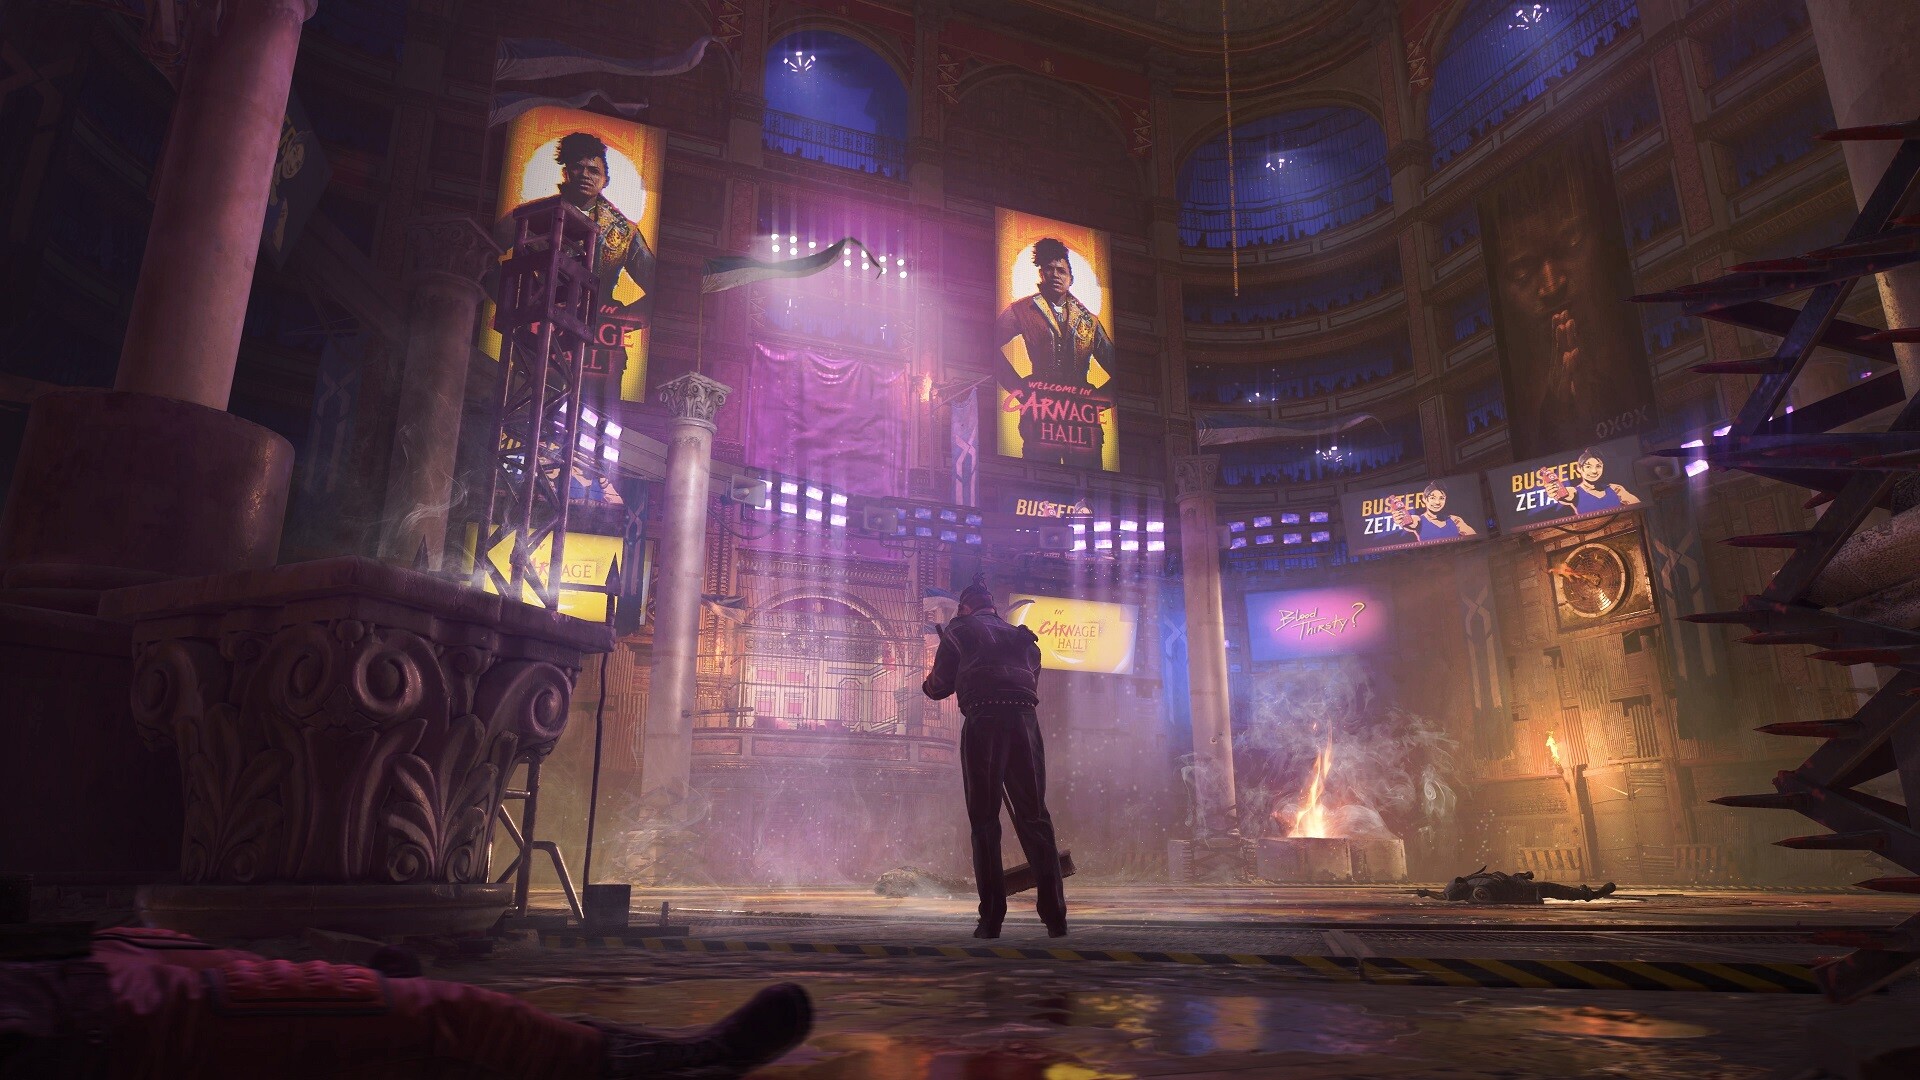 Dying Light 2 Stay Human - Bloody Ties DLC Steam CD Key